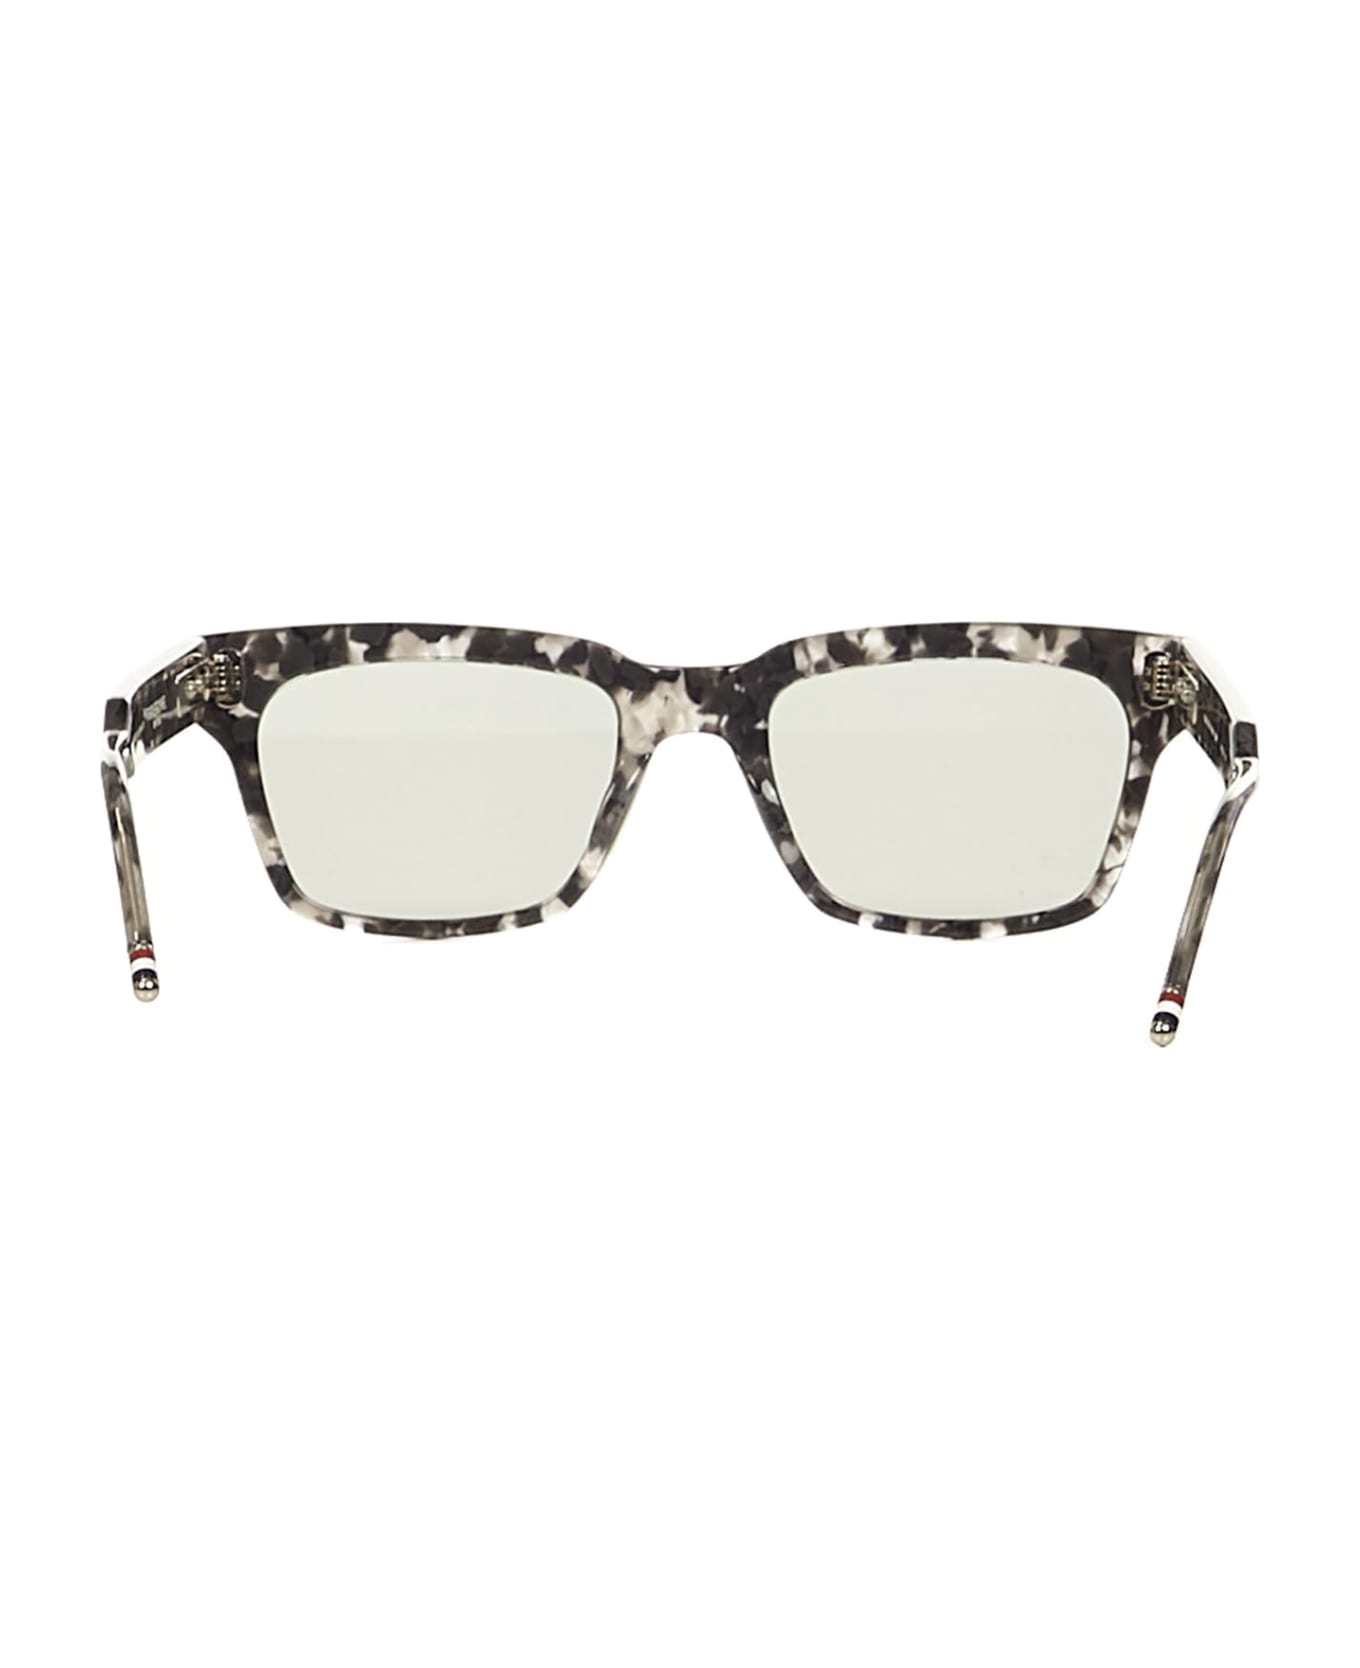 Thom Browne Sunglasses Tb418 Sunglasses - Dove Grey サングラス